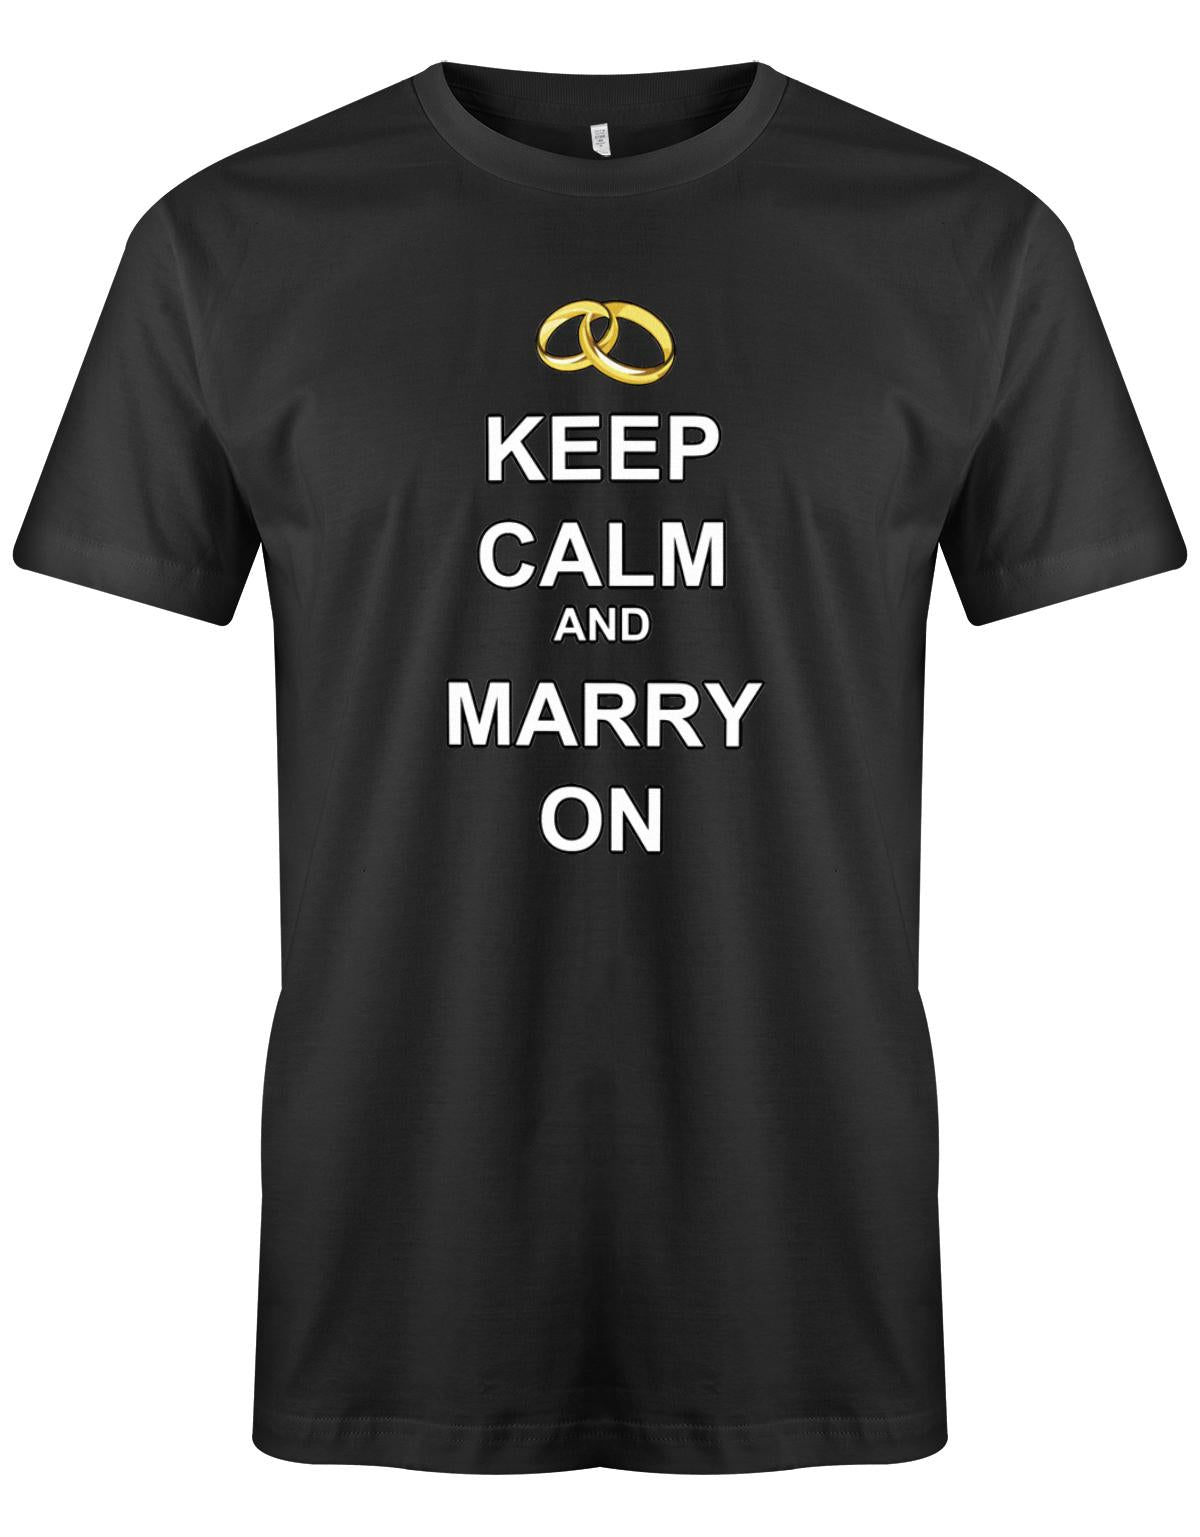 Keep-Calm-and-marry-on-Herren-JGA-Shirt-Schwarz